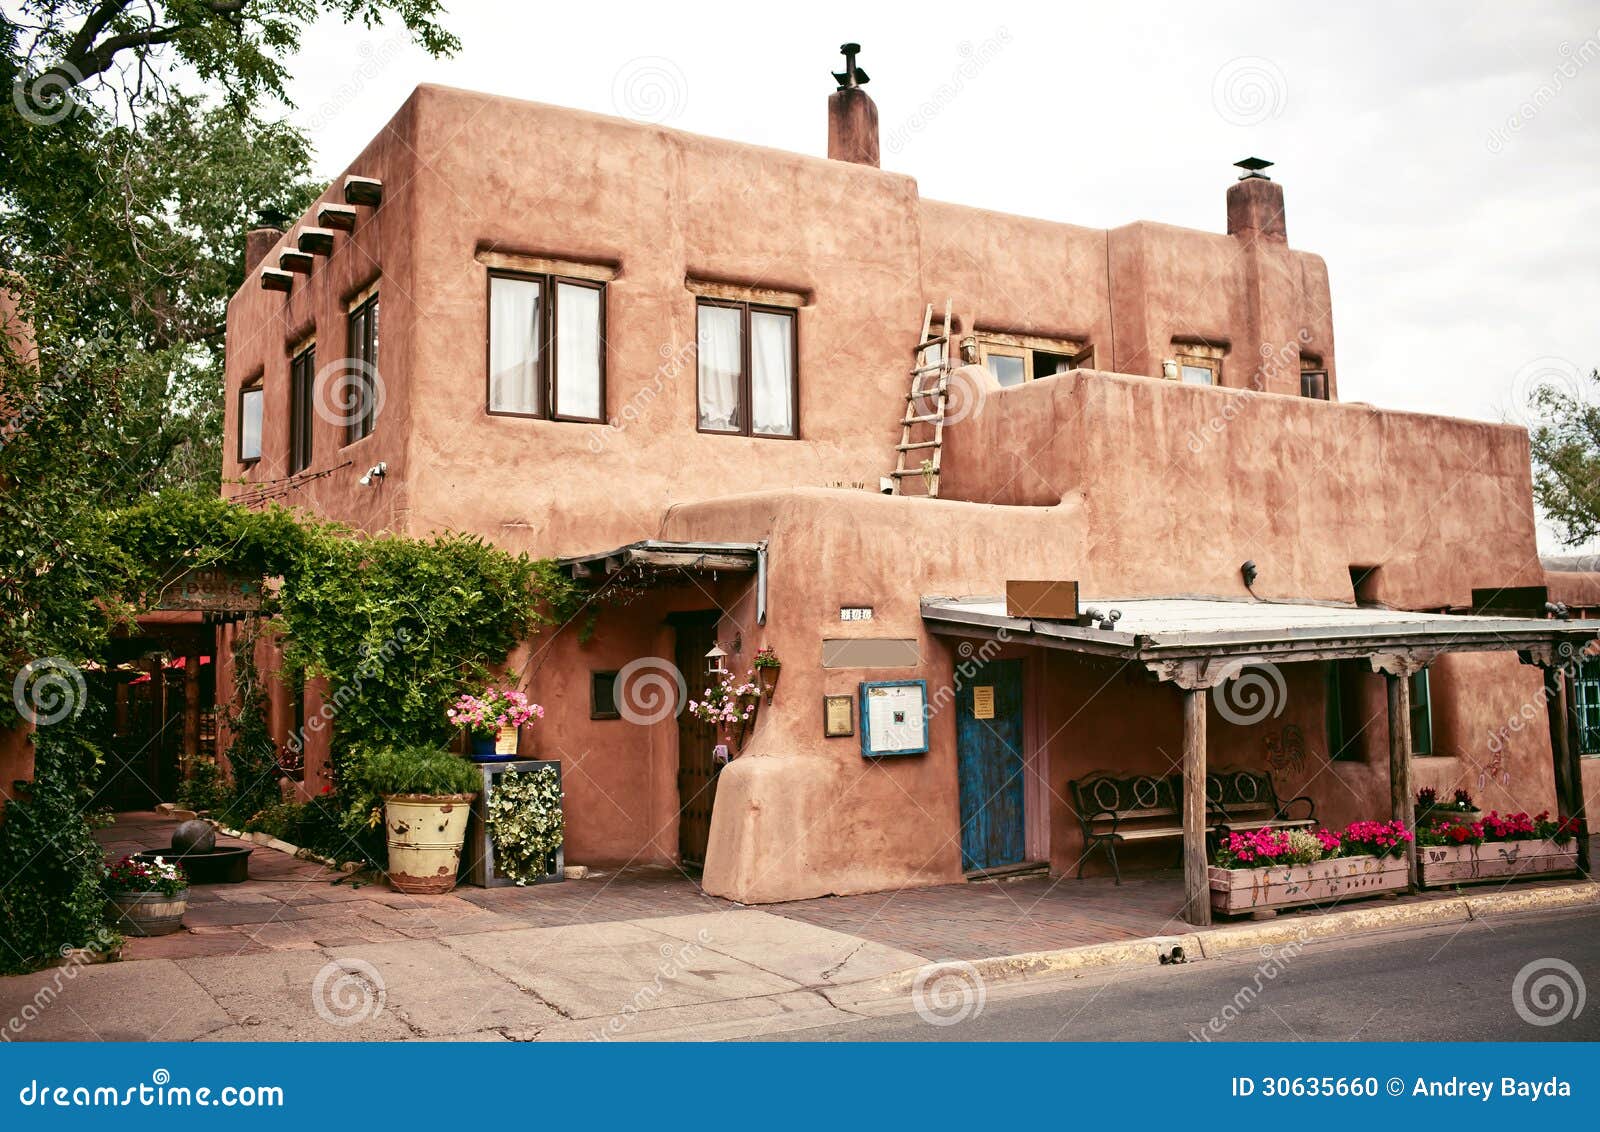 historical houses of santa fe, new mexico